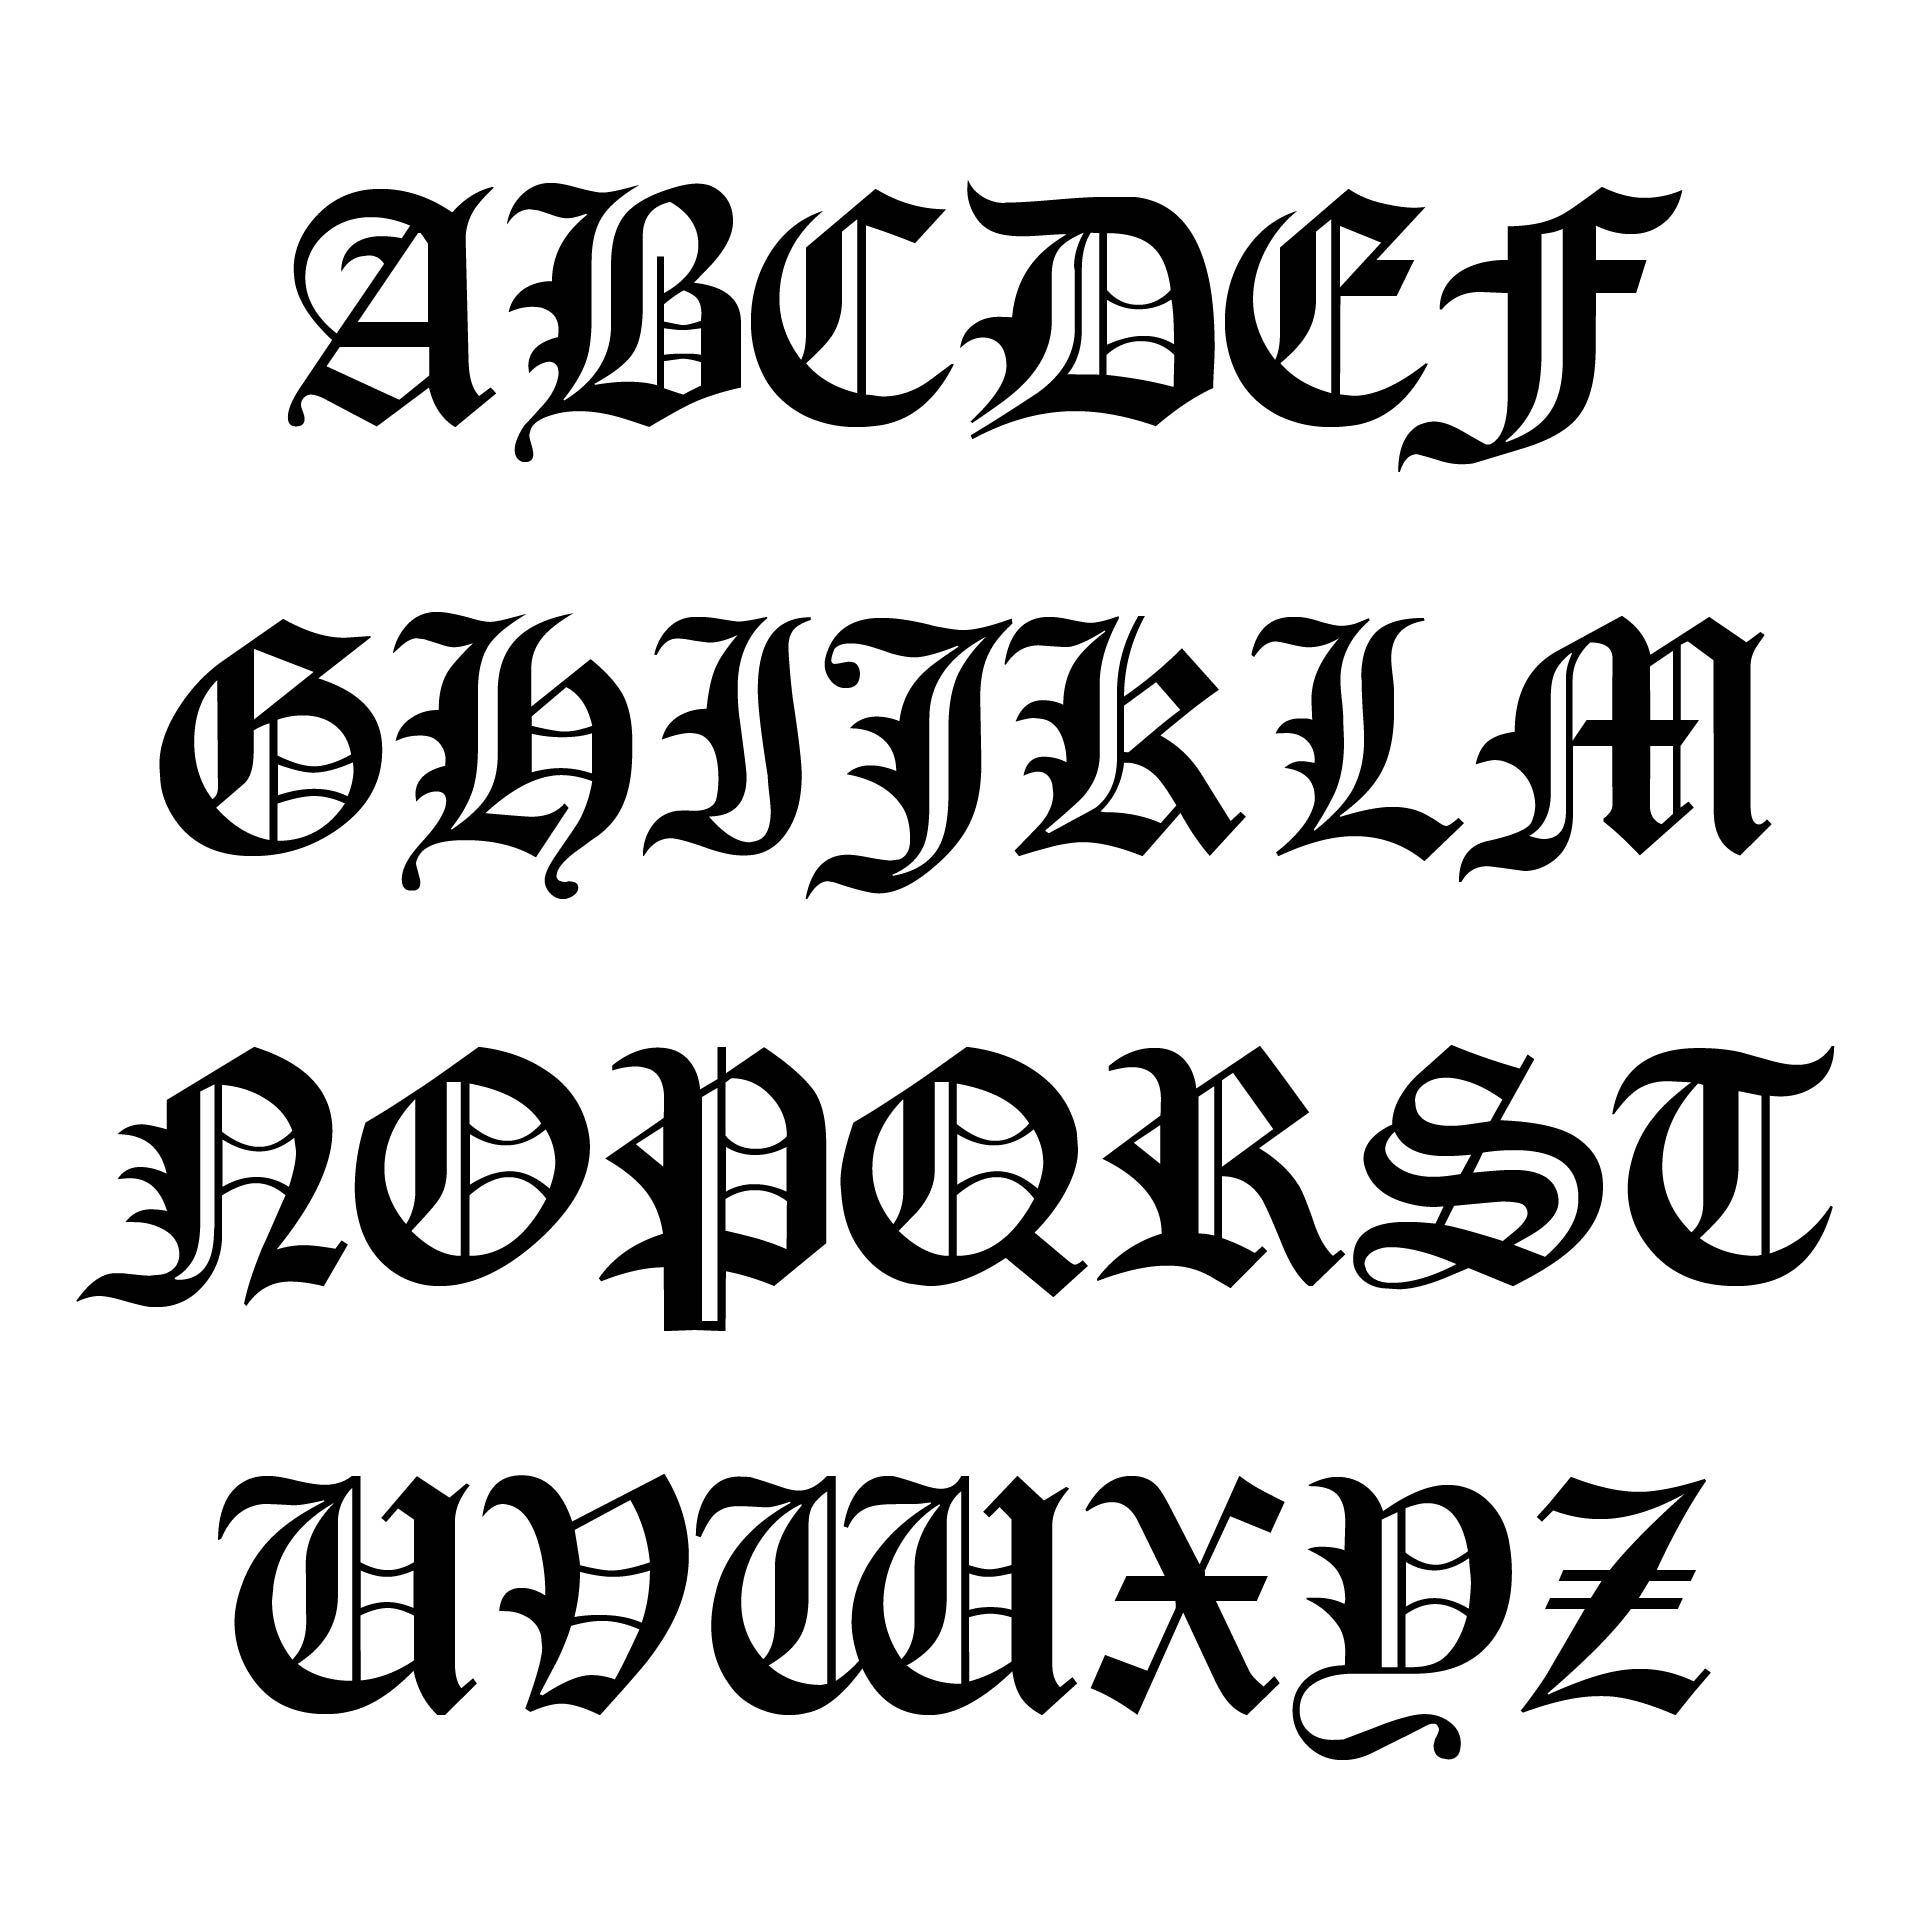 5 Best Images of Printable Old English Alphabet AZ Gothic Old